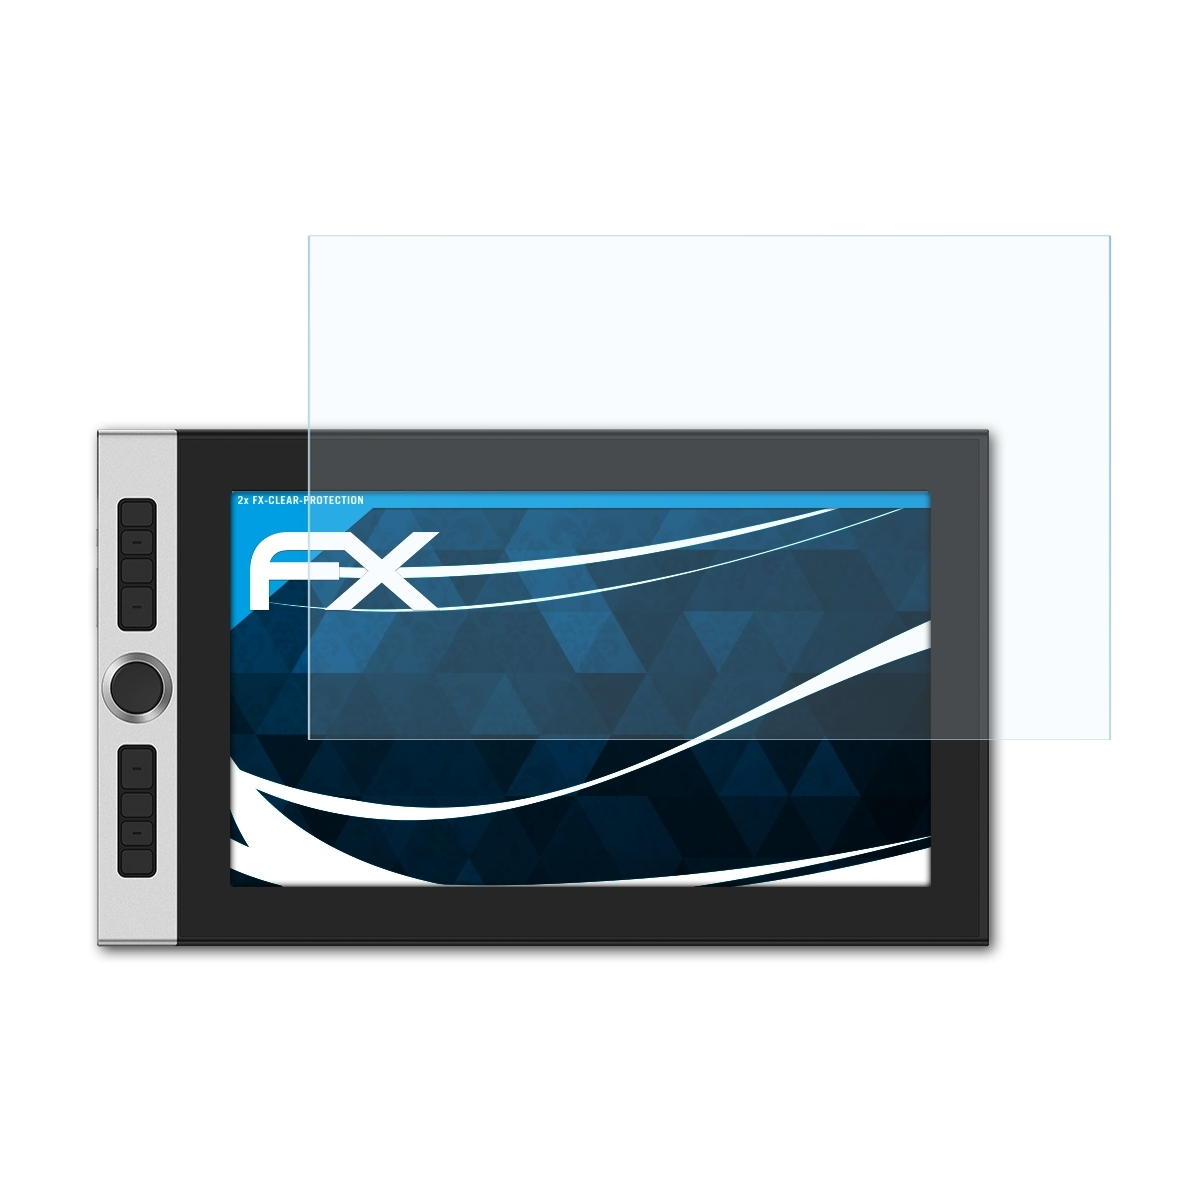 ATFOLIX 2x Displayschutz(für XP-PEN 16) FX-Clear Innovator